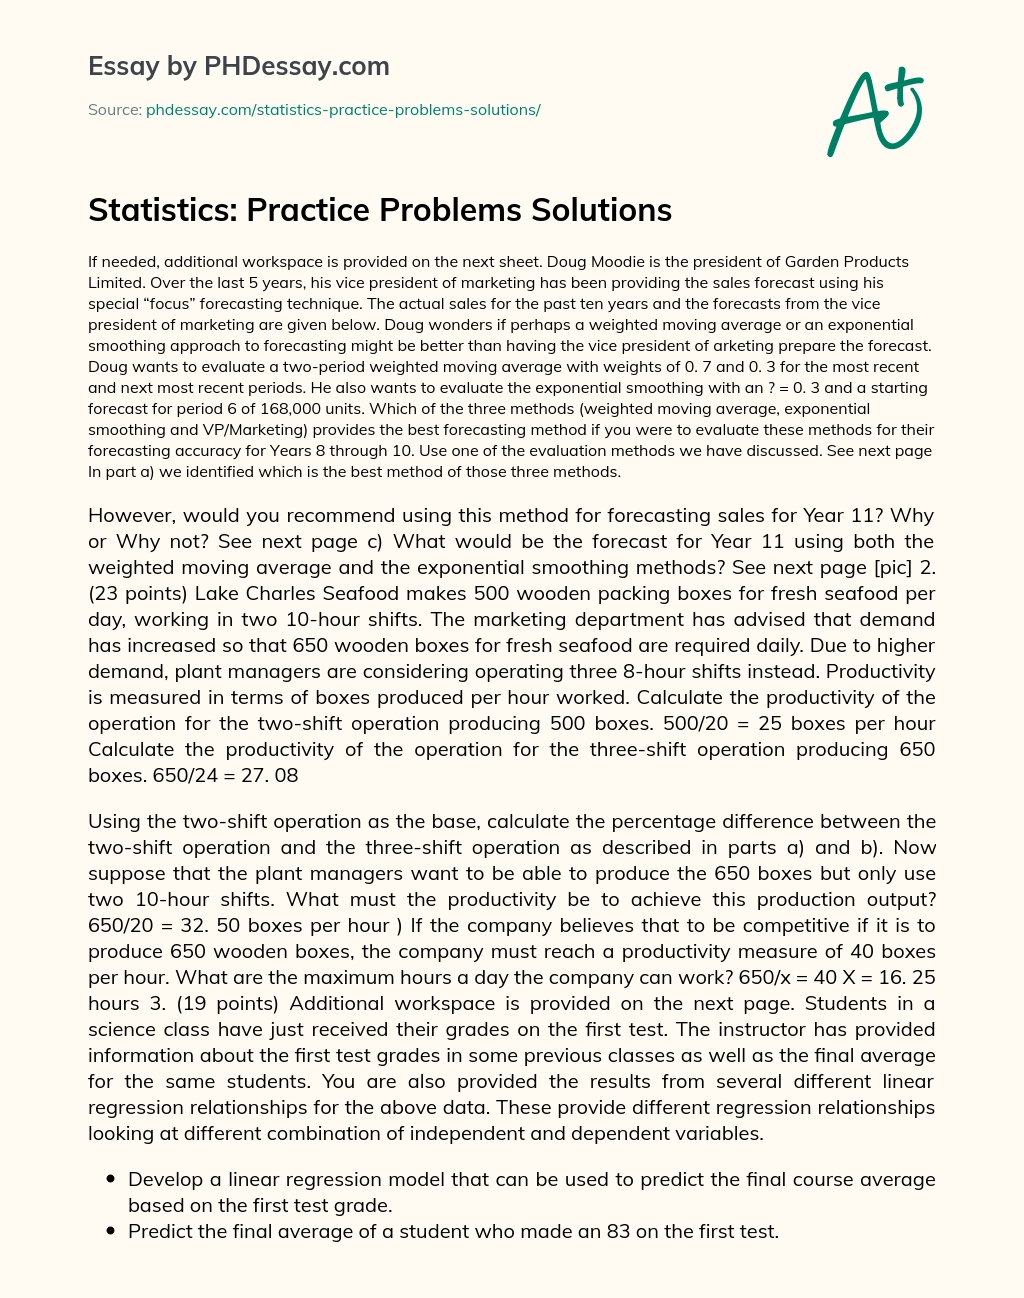 Statistics: Practice Problems Solutions essay